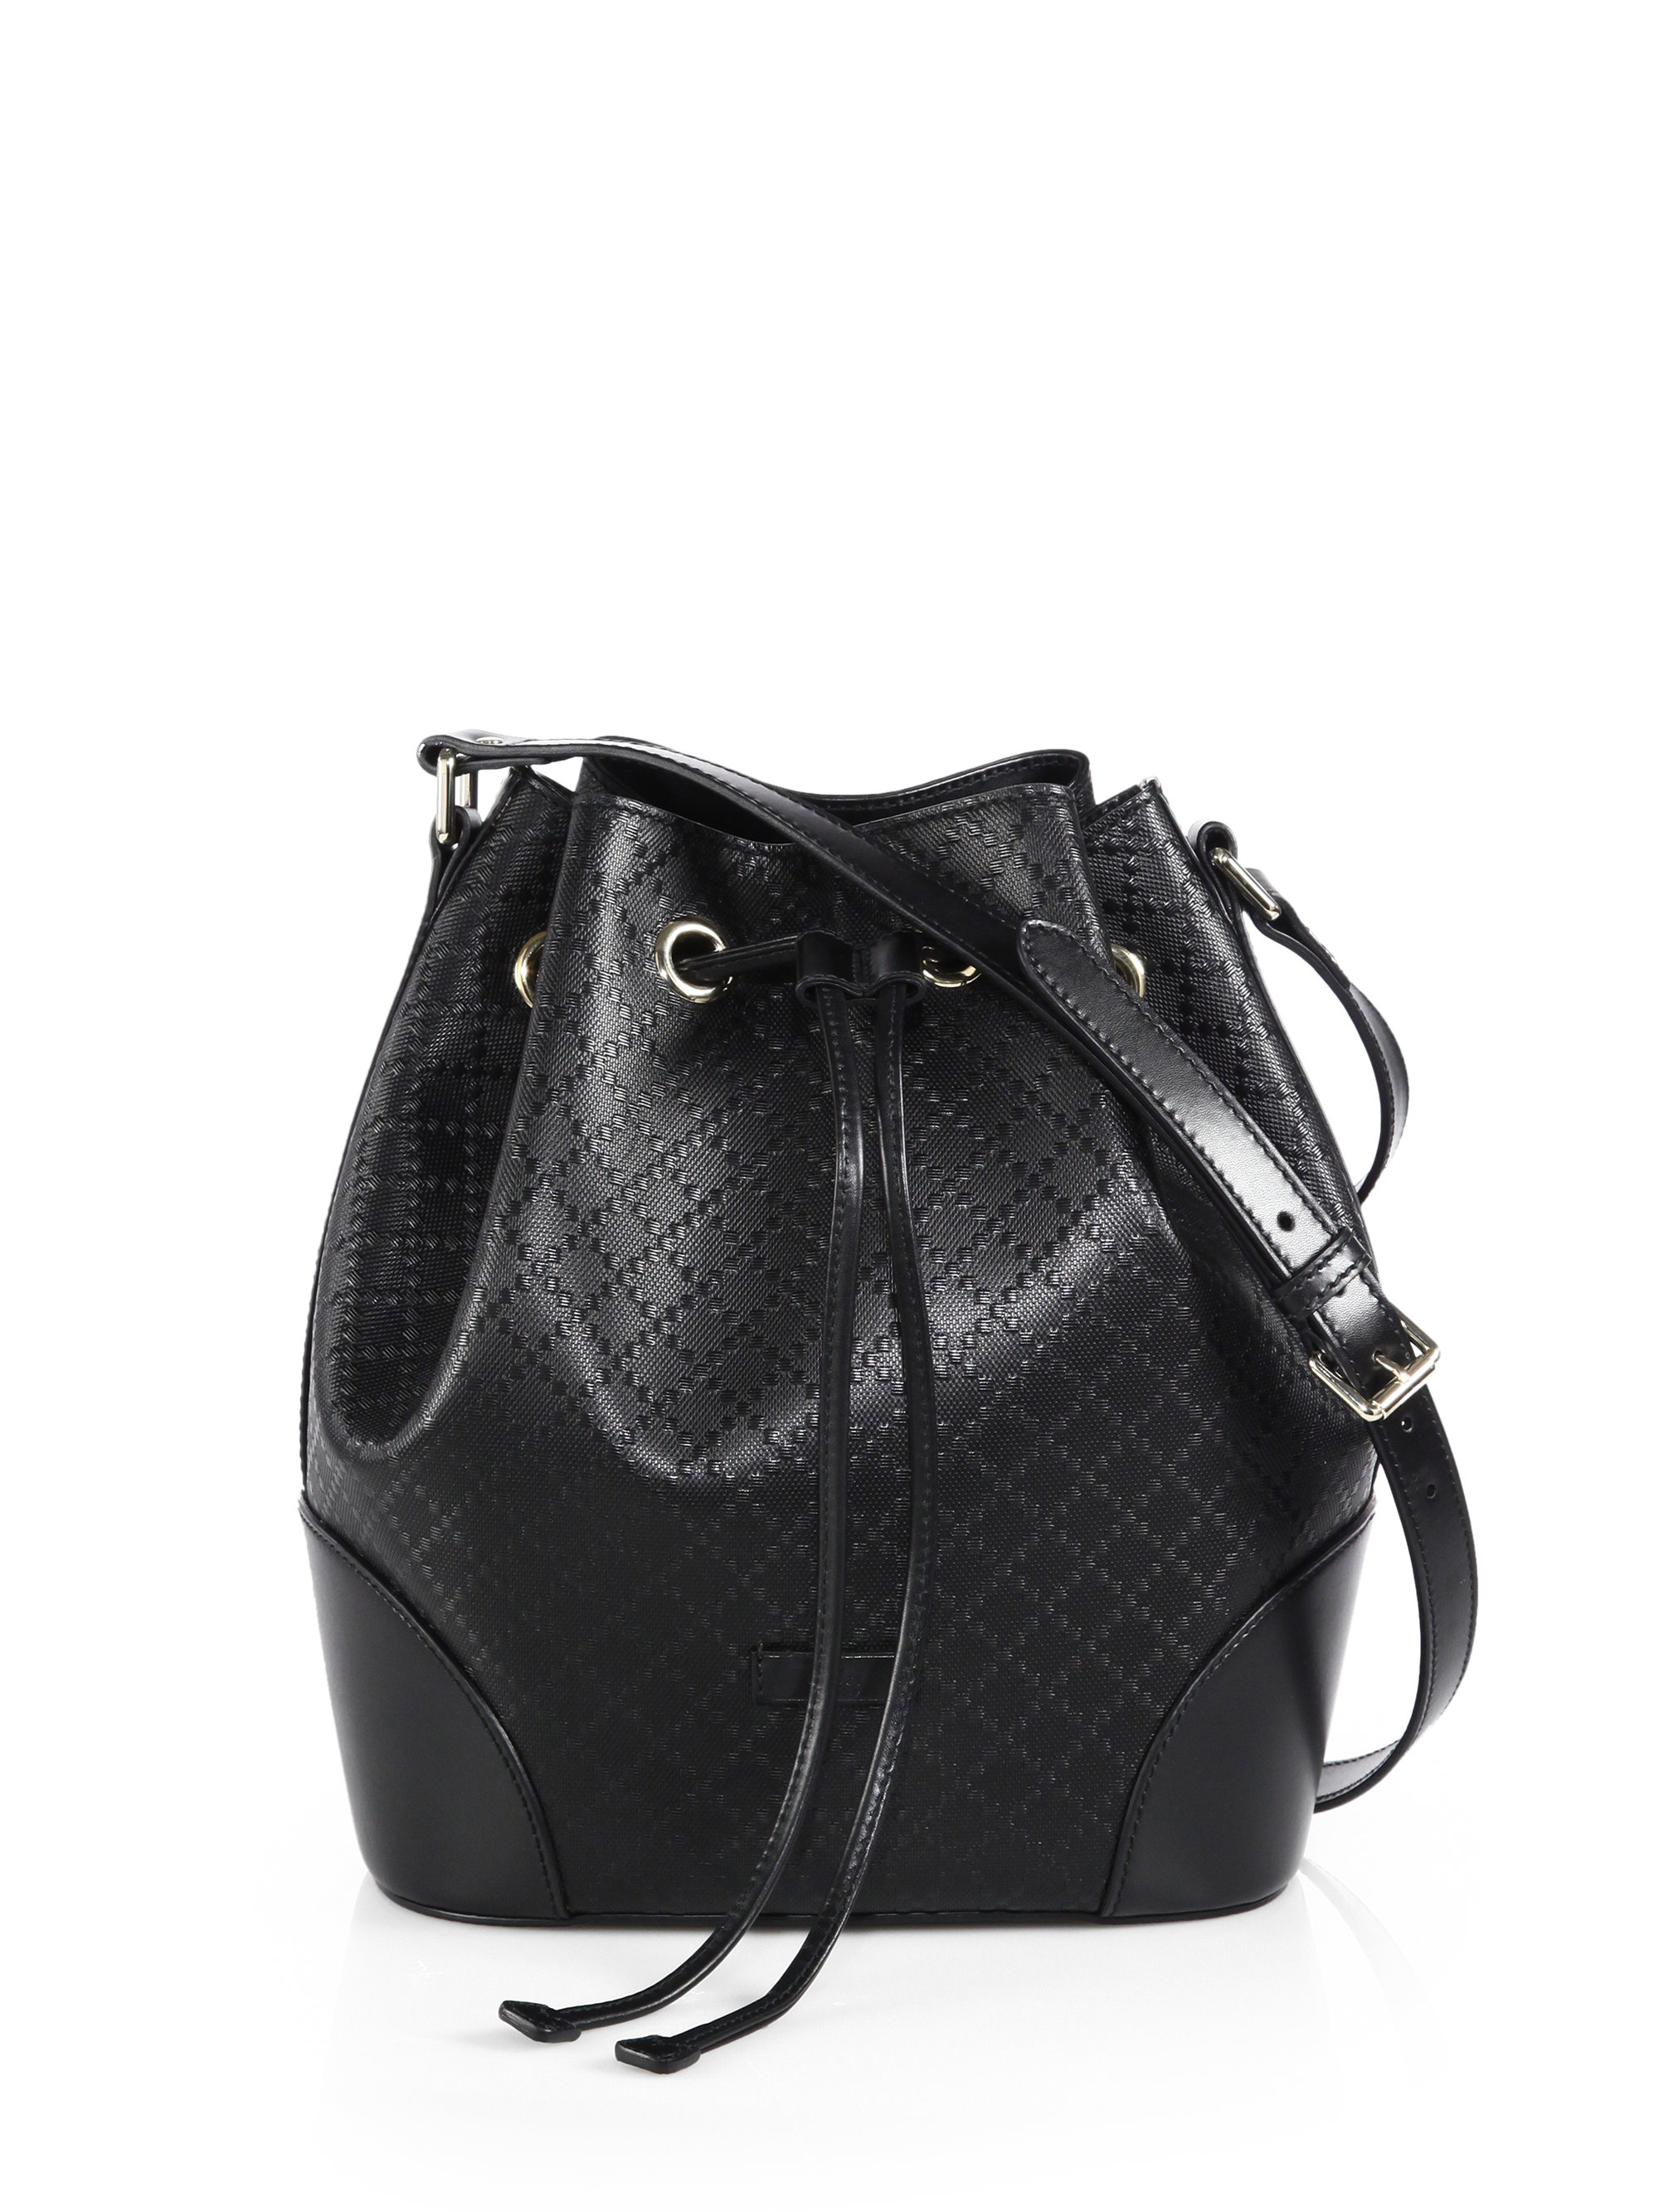 Gucci Bright Diamante Leather Bucket Bag in Black | Lyst